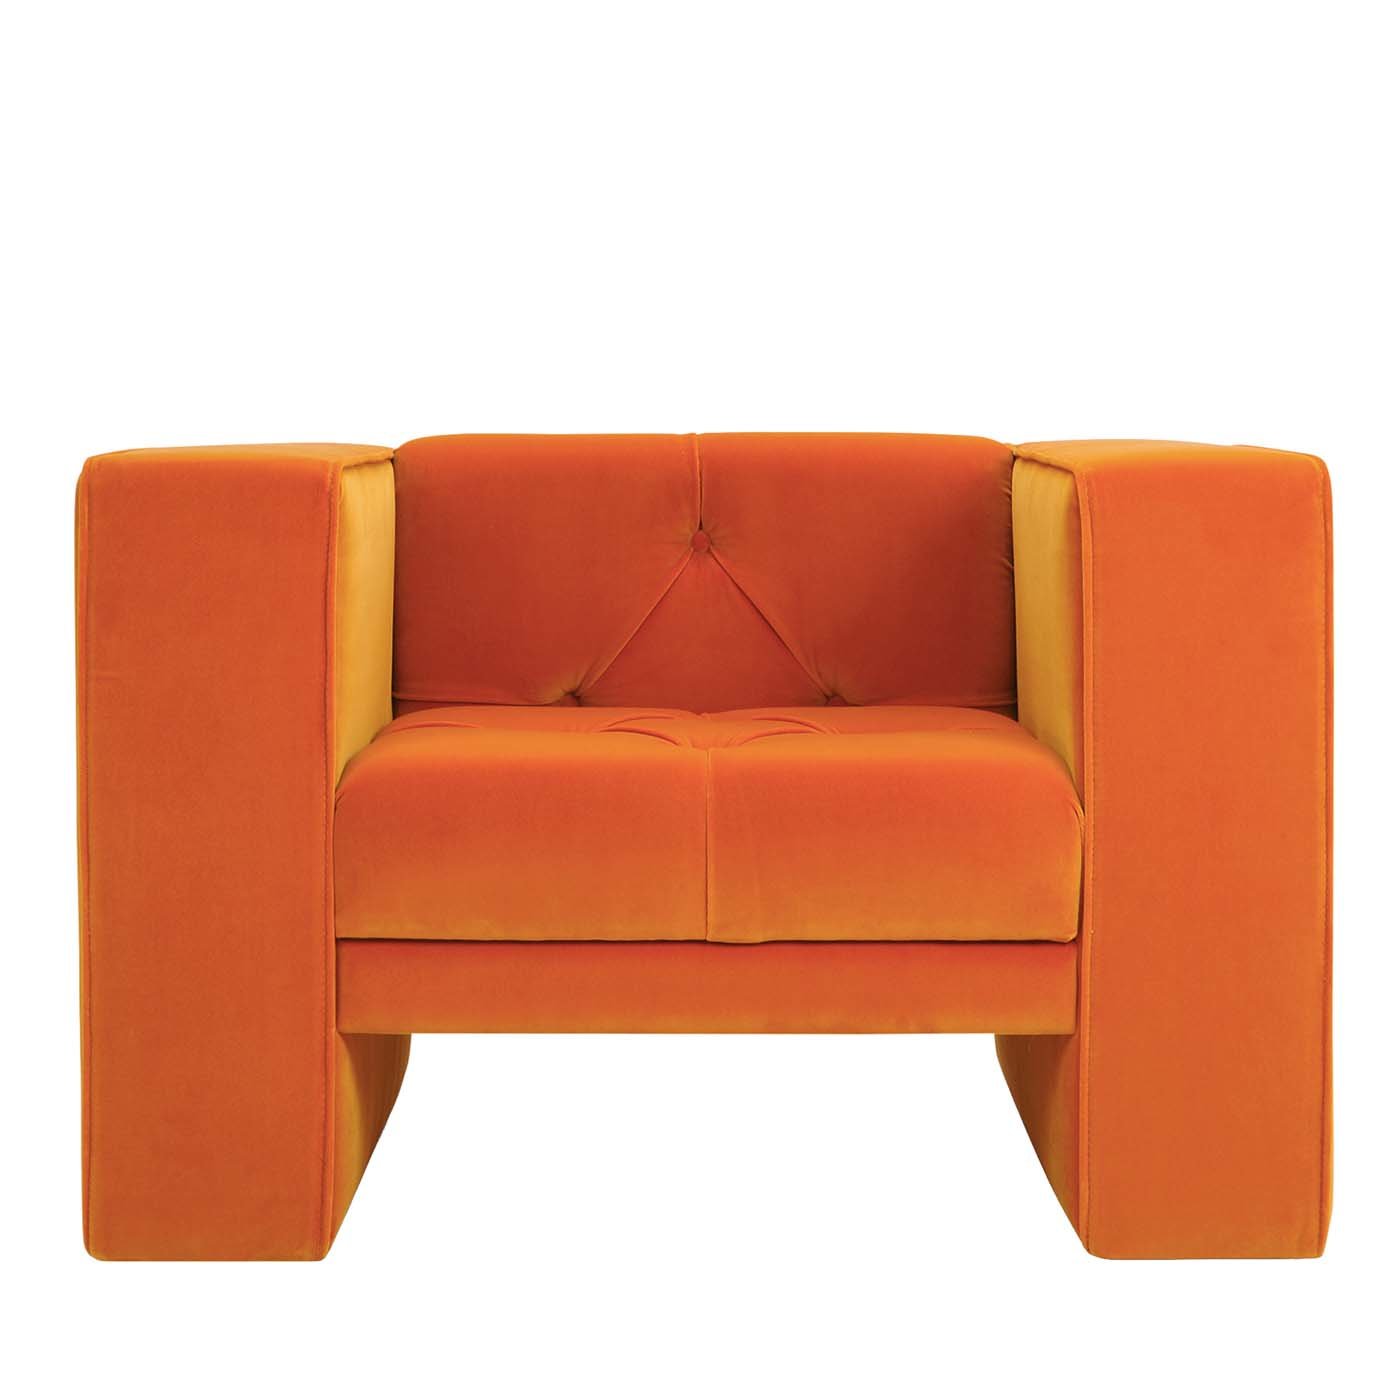 Tubby Orange Armchair - Main view